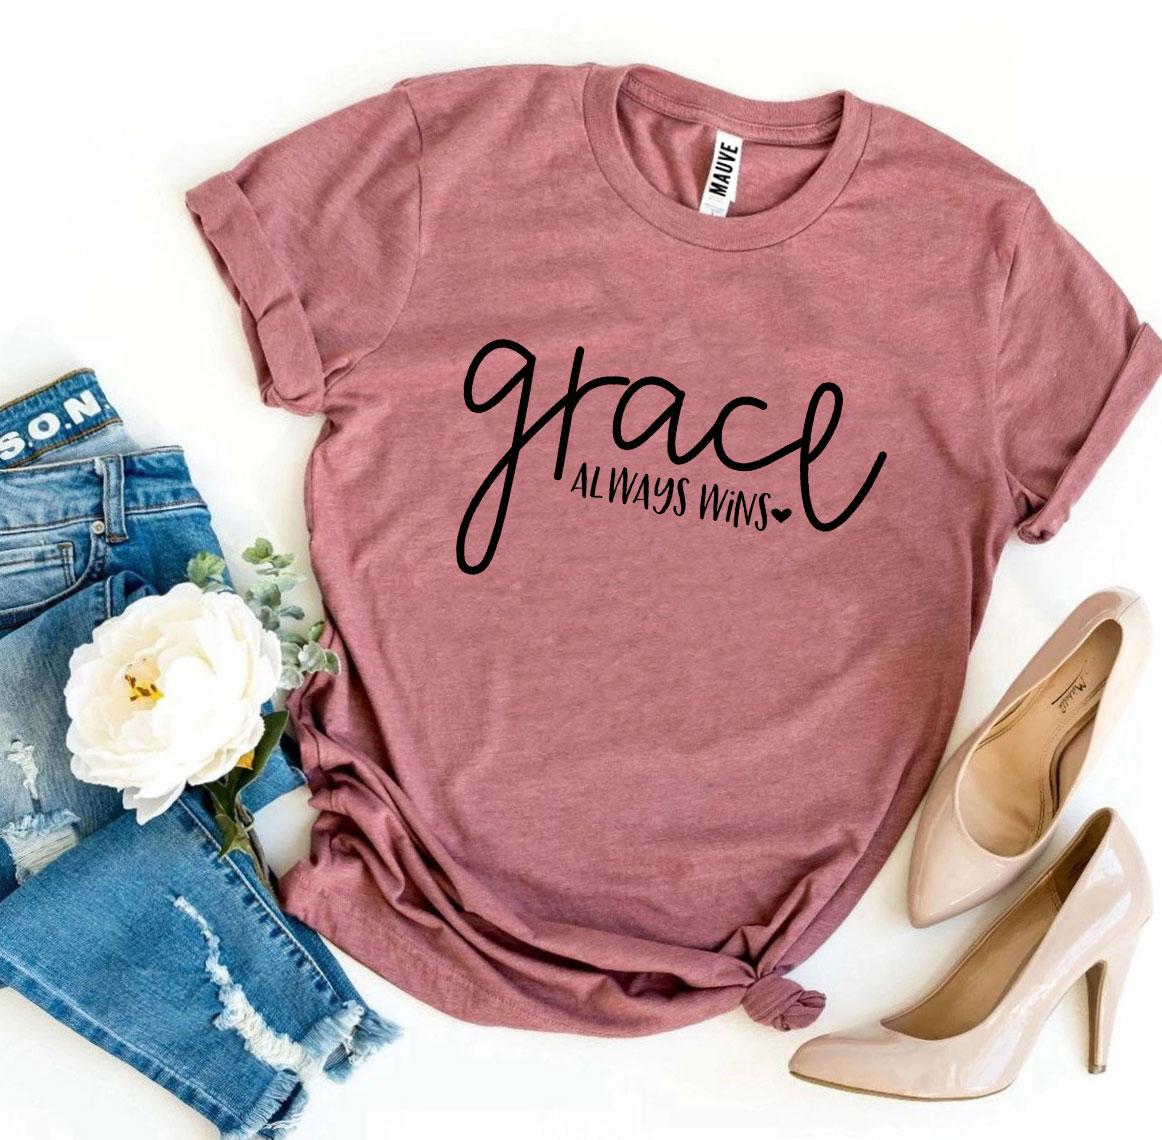 Grace Always Wins T-shirt